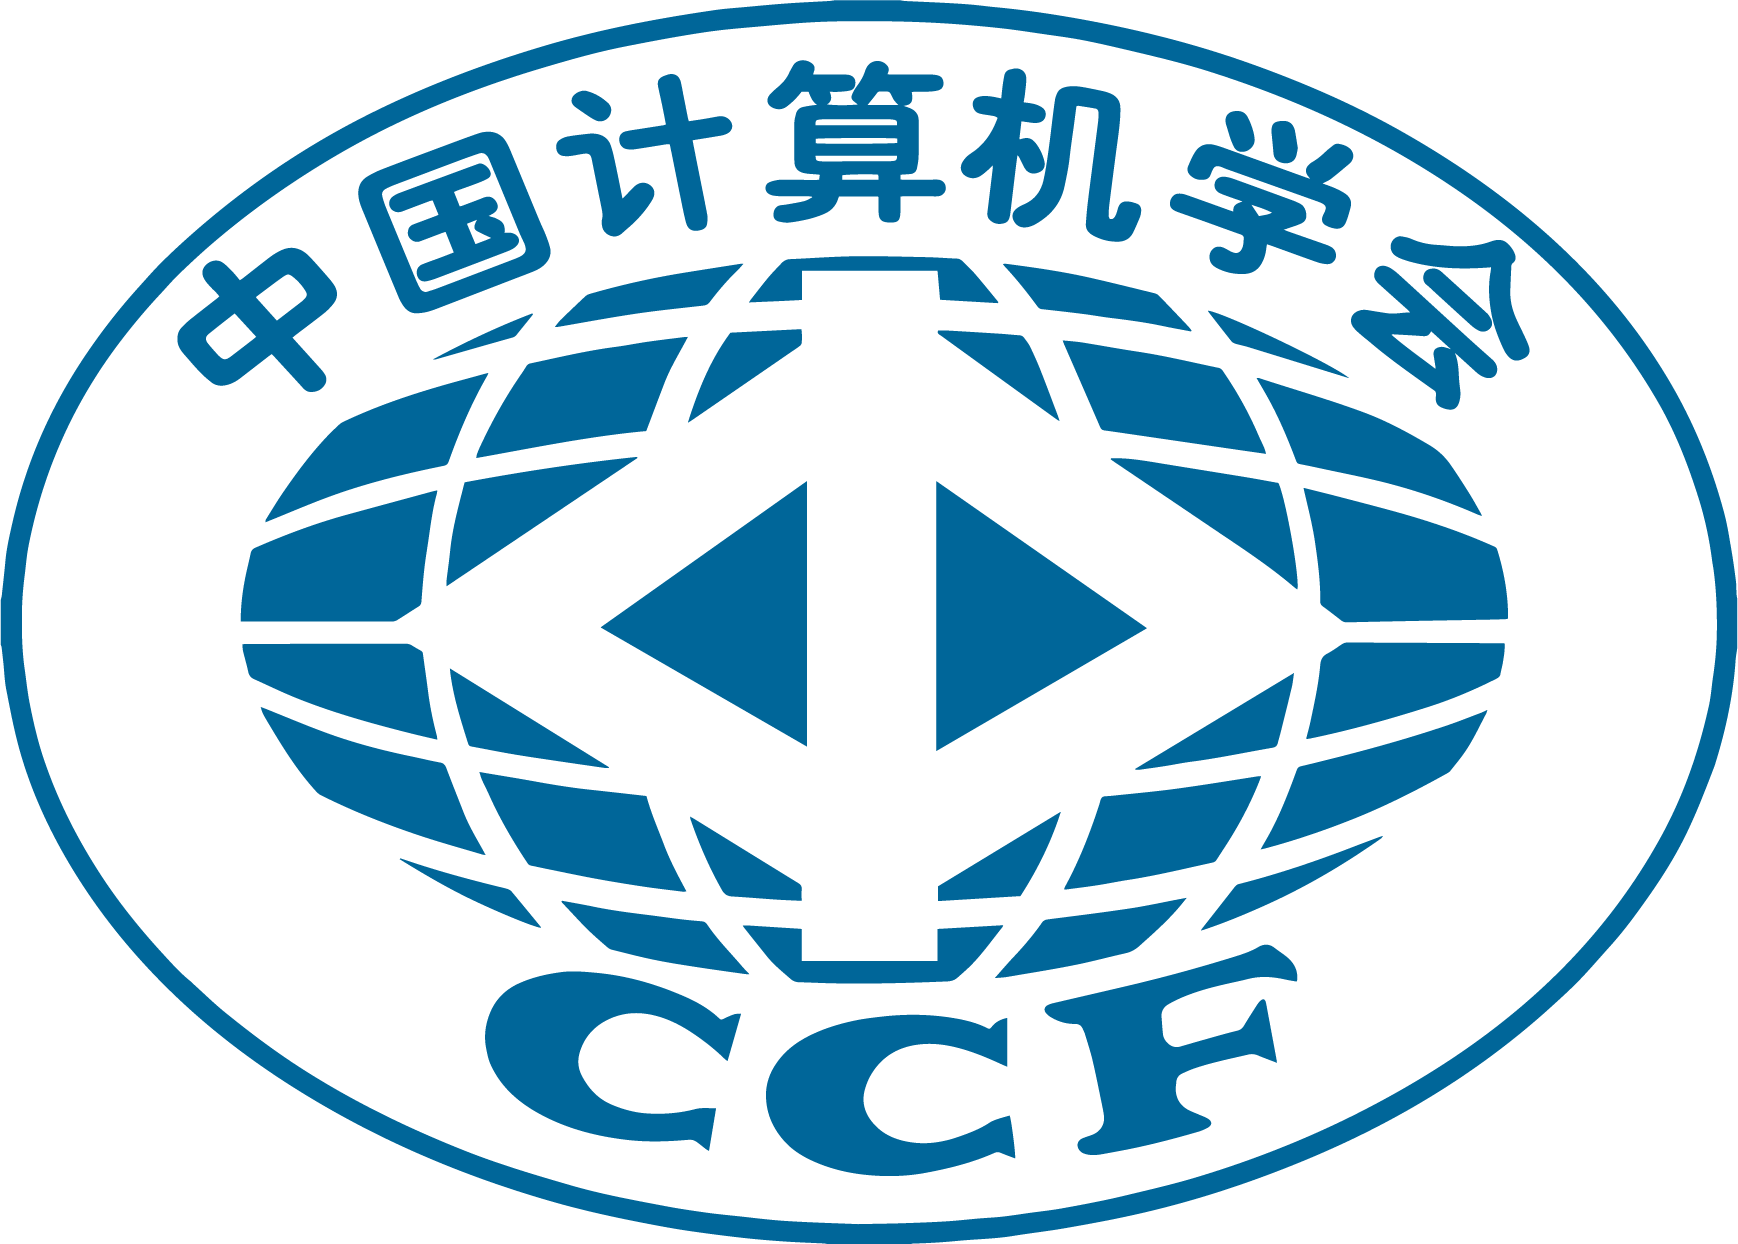 China Computer Federation